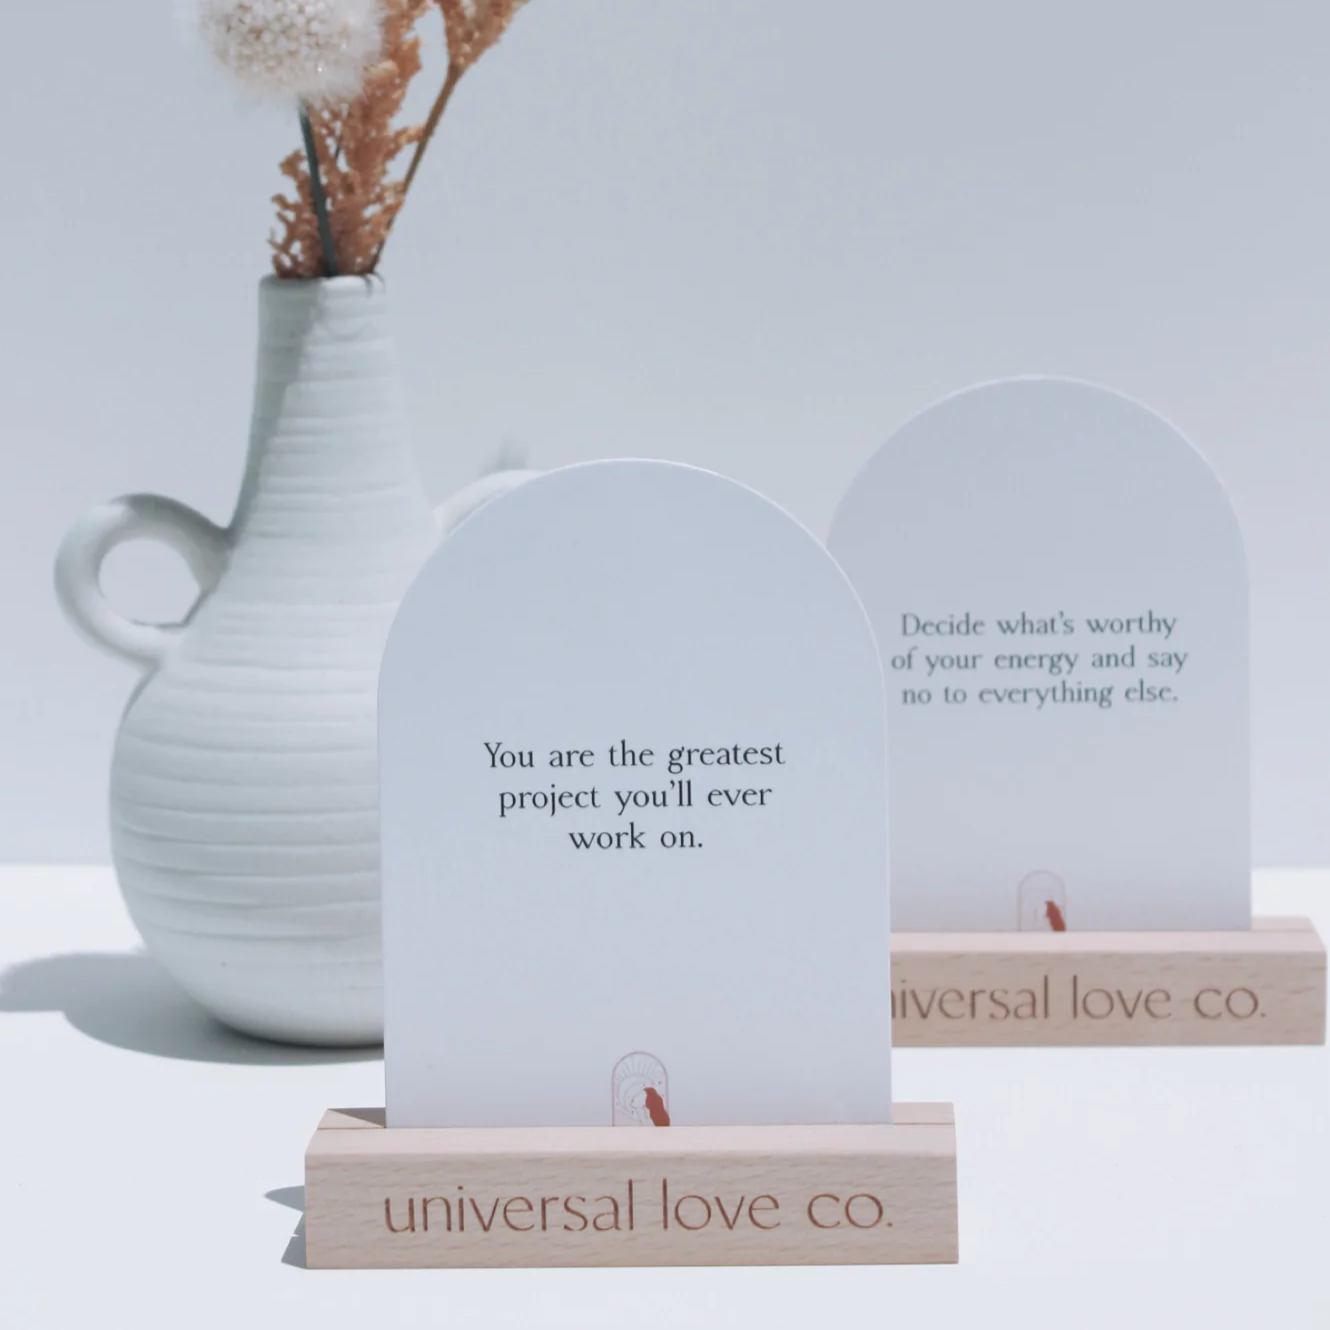 Universal Love Affirmation Card Deck